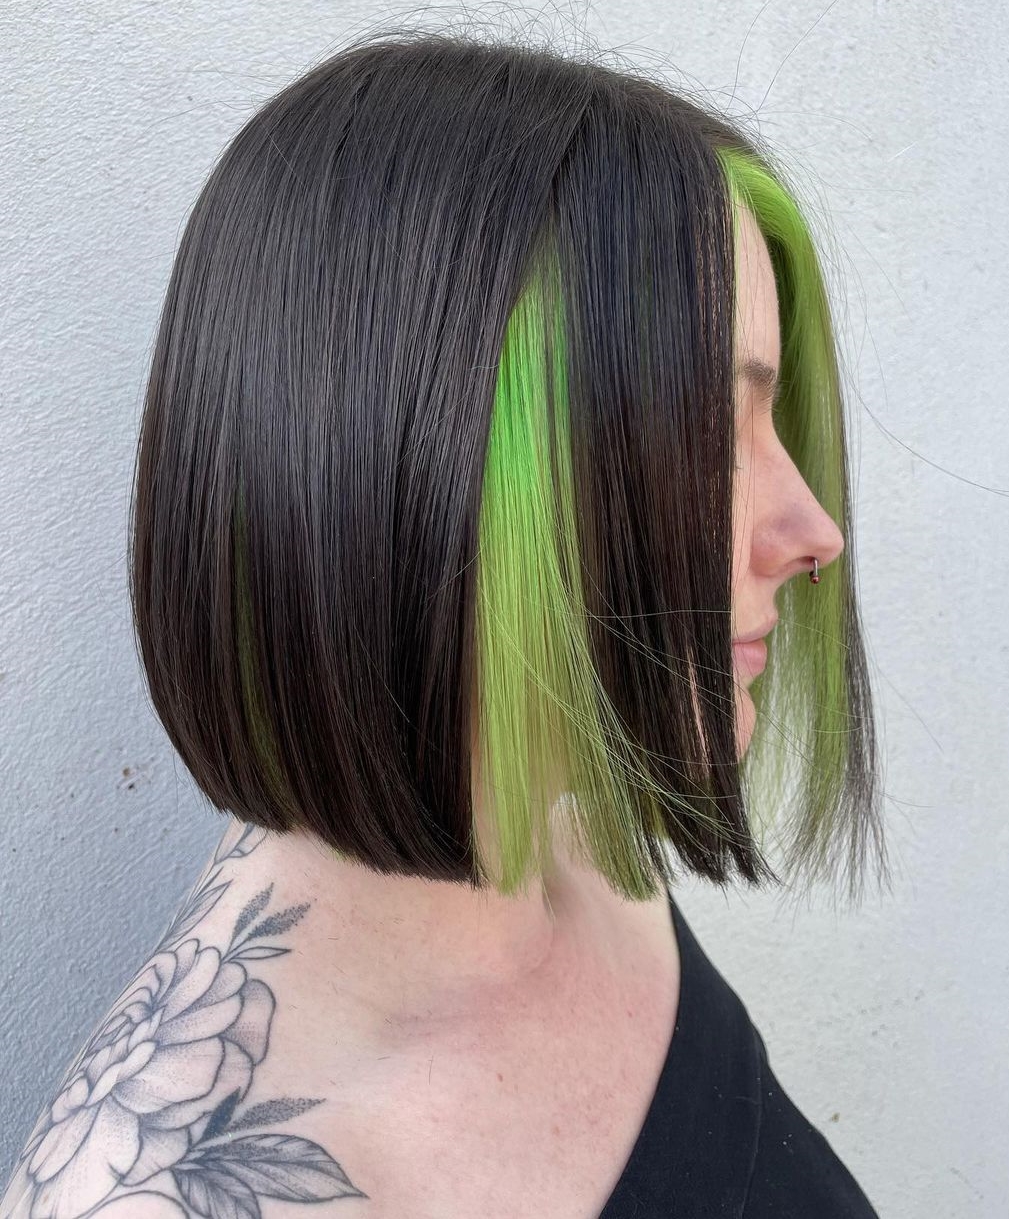 Green Peekaboo Highlights on Short Brown Hair